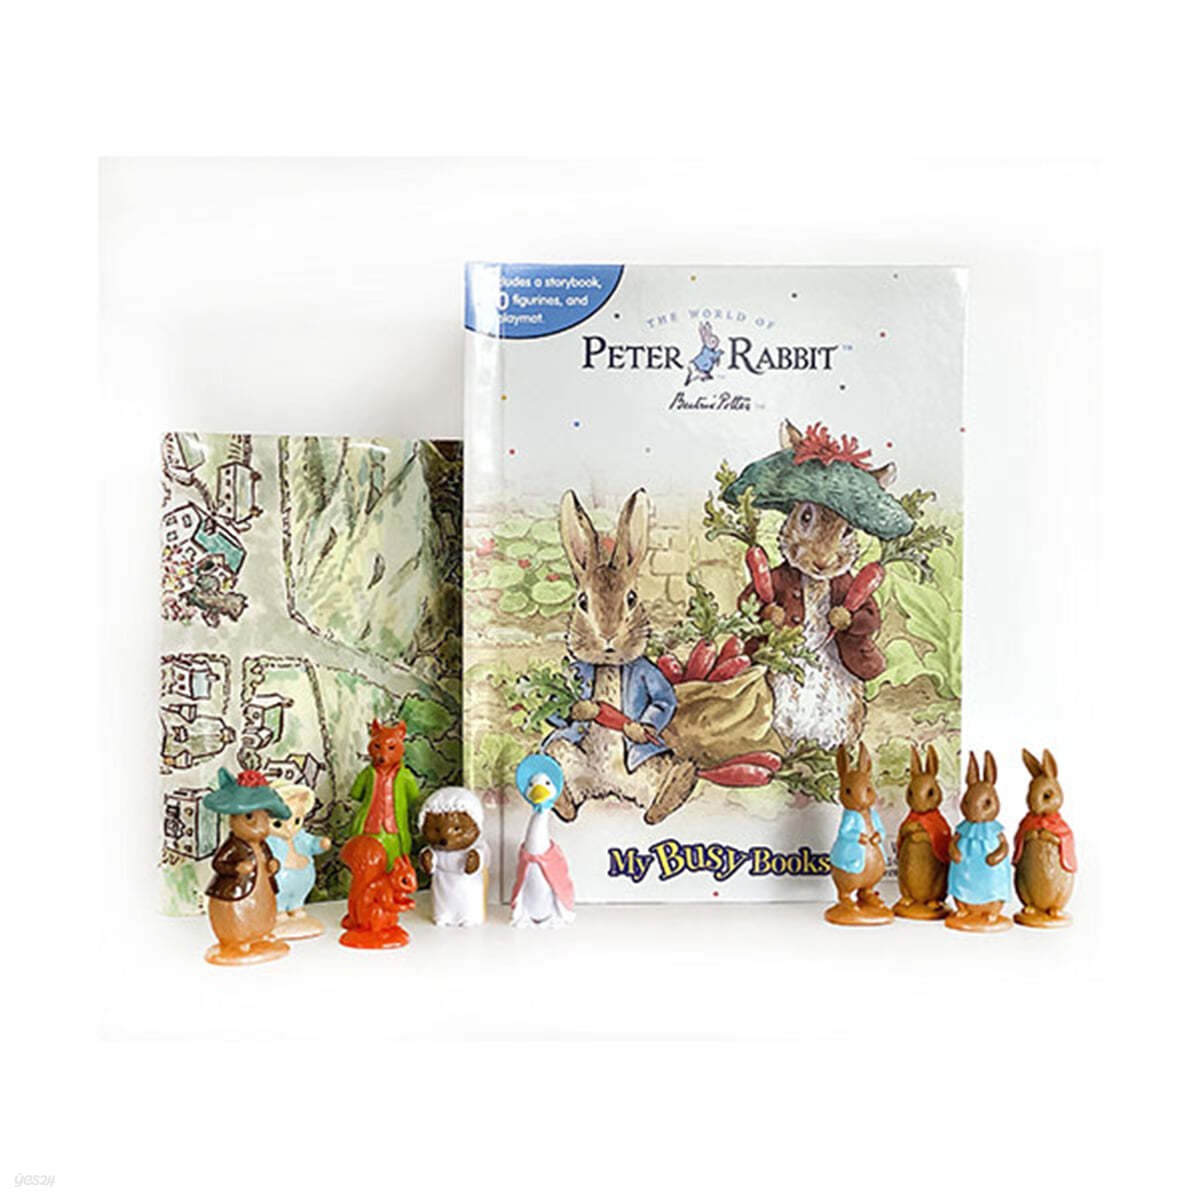 Peter Rabbit Classic My Busy Books 피터래빗 마이 비지북